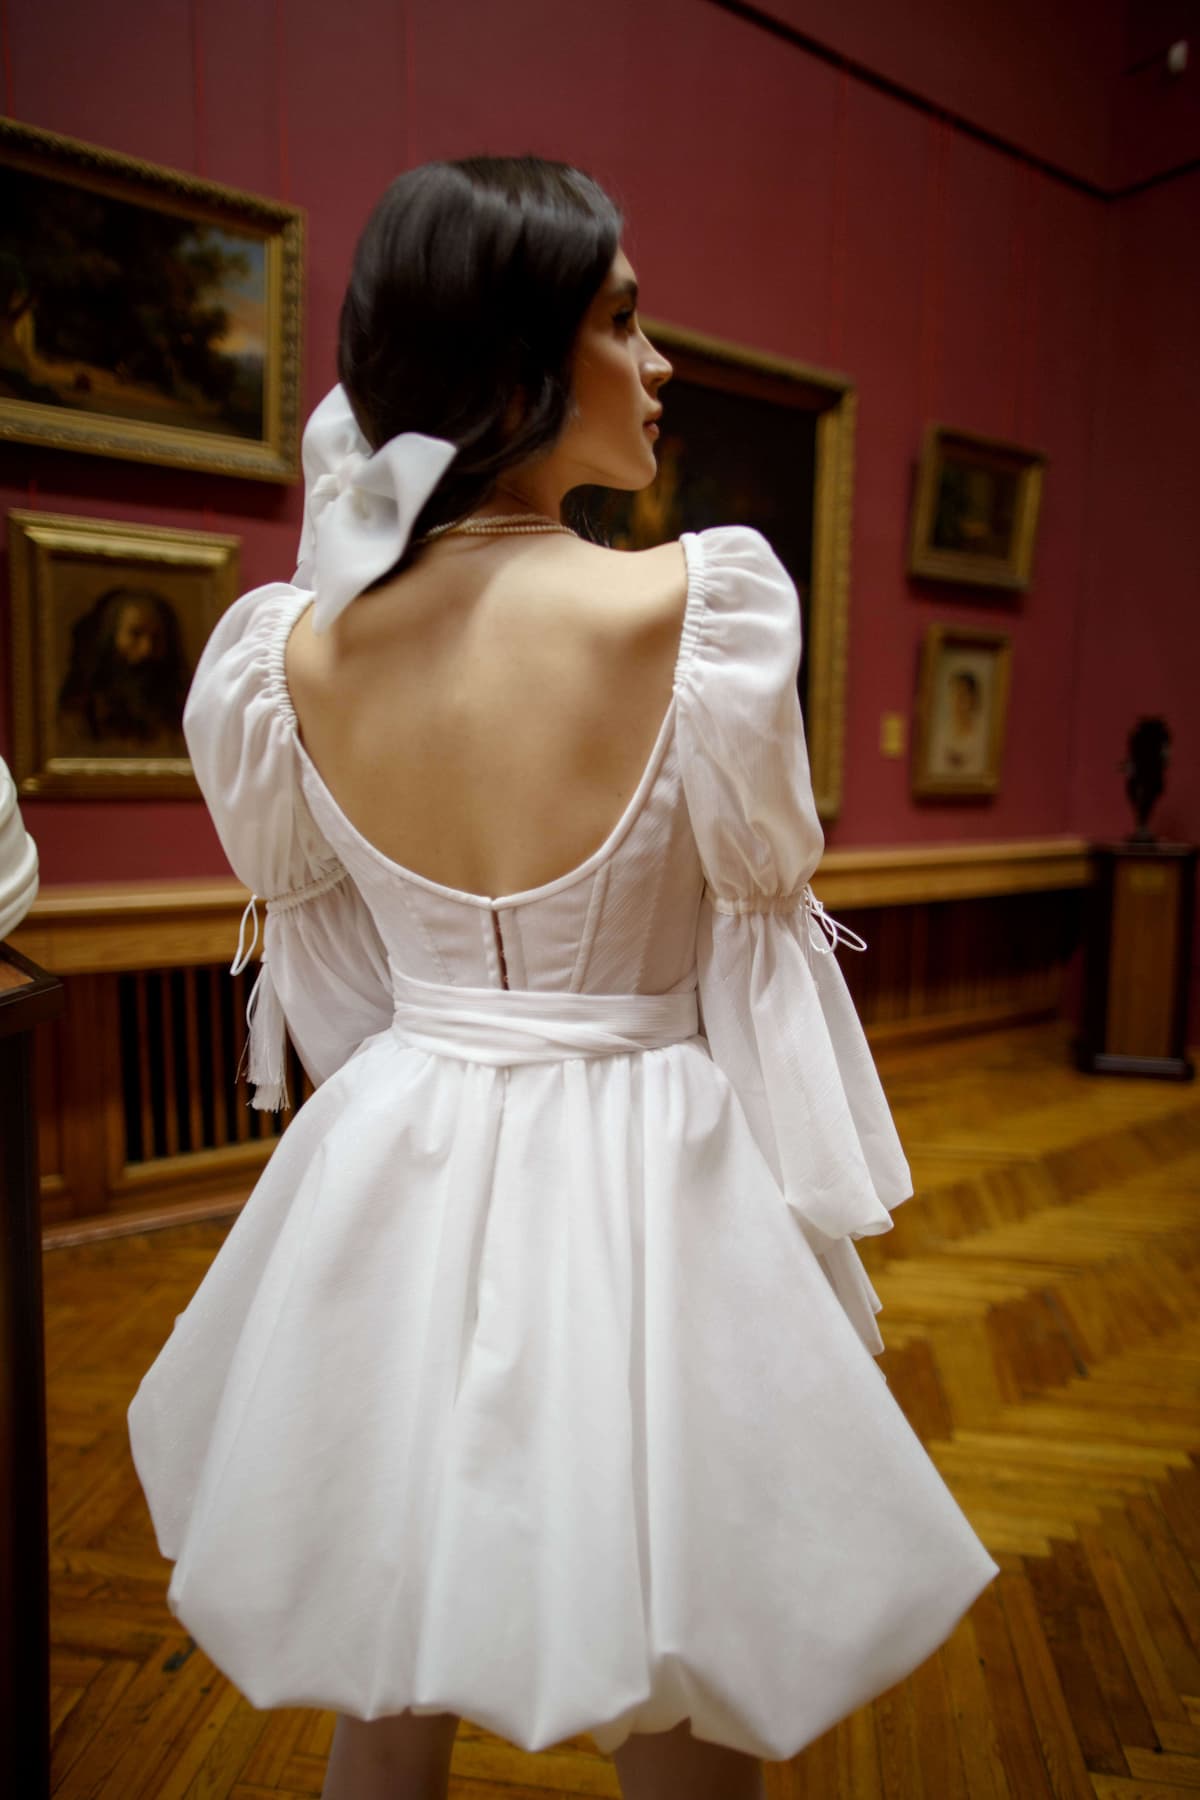 Short wedding dress Lu whith long sleeves by Rara Avis at dell'amore bridal, auckland, nz 2